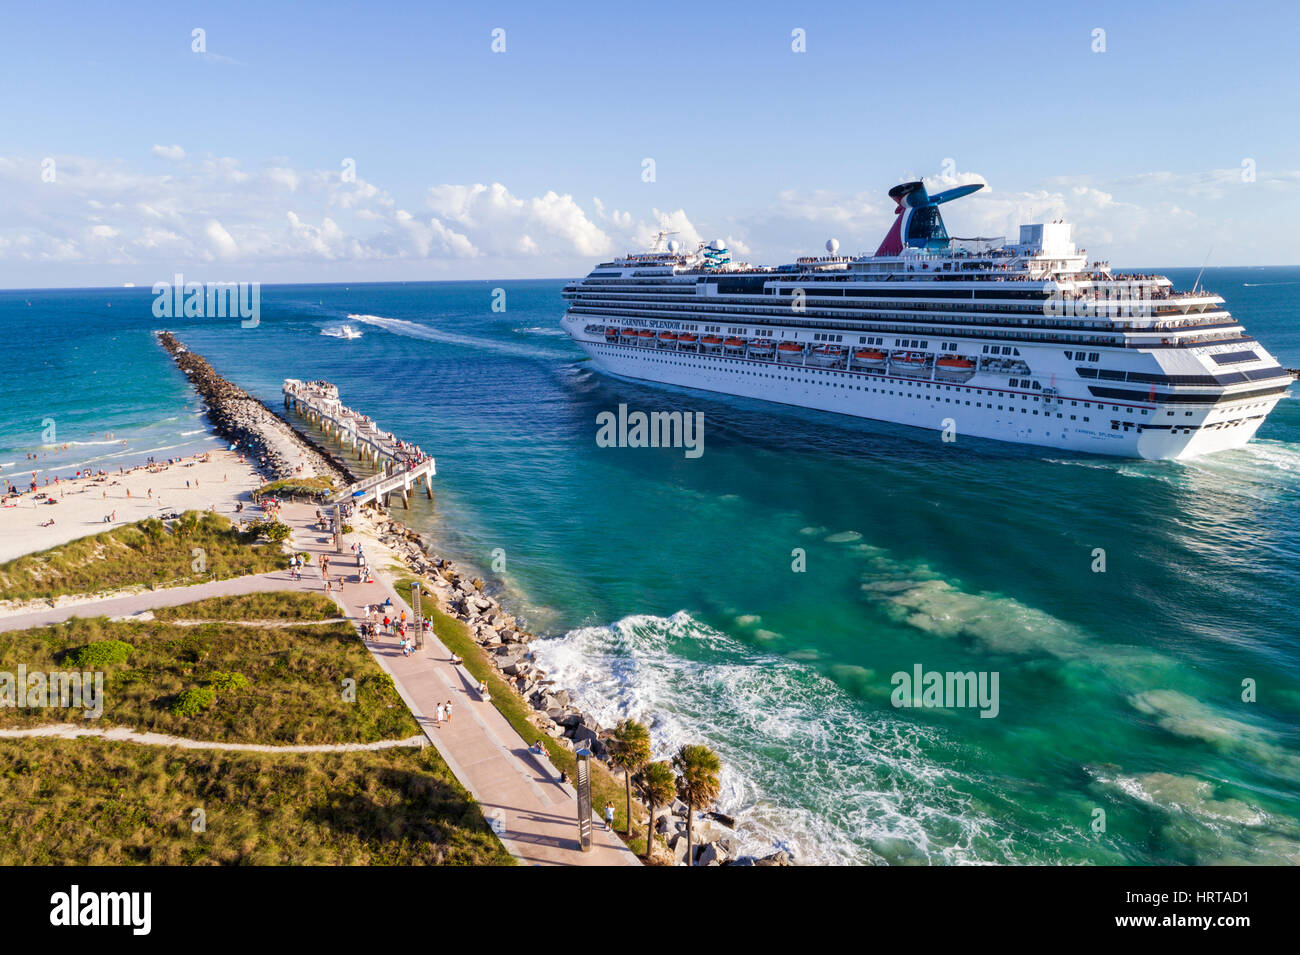 Miami Beach, Florida, Atlantischer Ozean, Government Cut, South Pointe Park Pier, Carnival Splendor Cruise Ship, Abfahrt vom Hafen von Miami, Wake, Luftüberblick Stockfoto